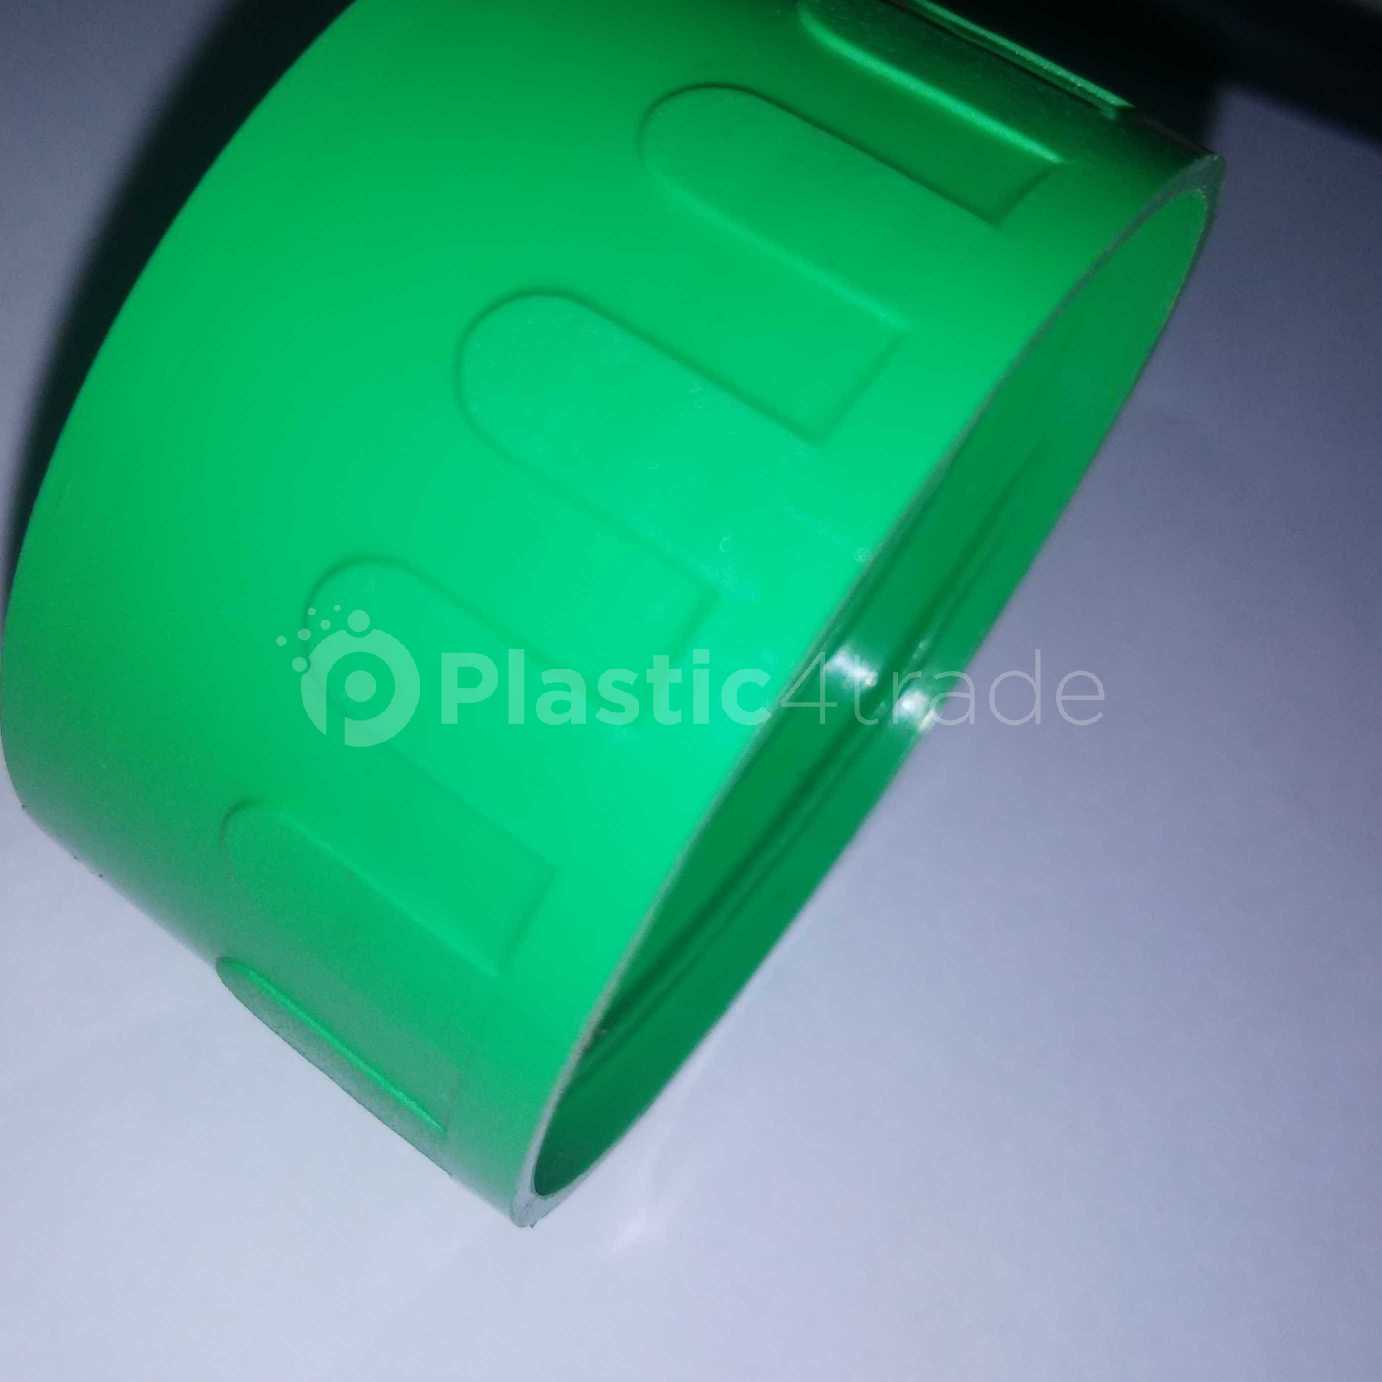 PET PBT PPCP Prime/Virgin Injection Molding gujarat india Plastic4trade